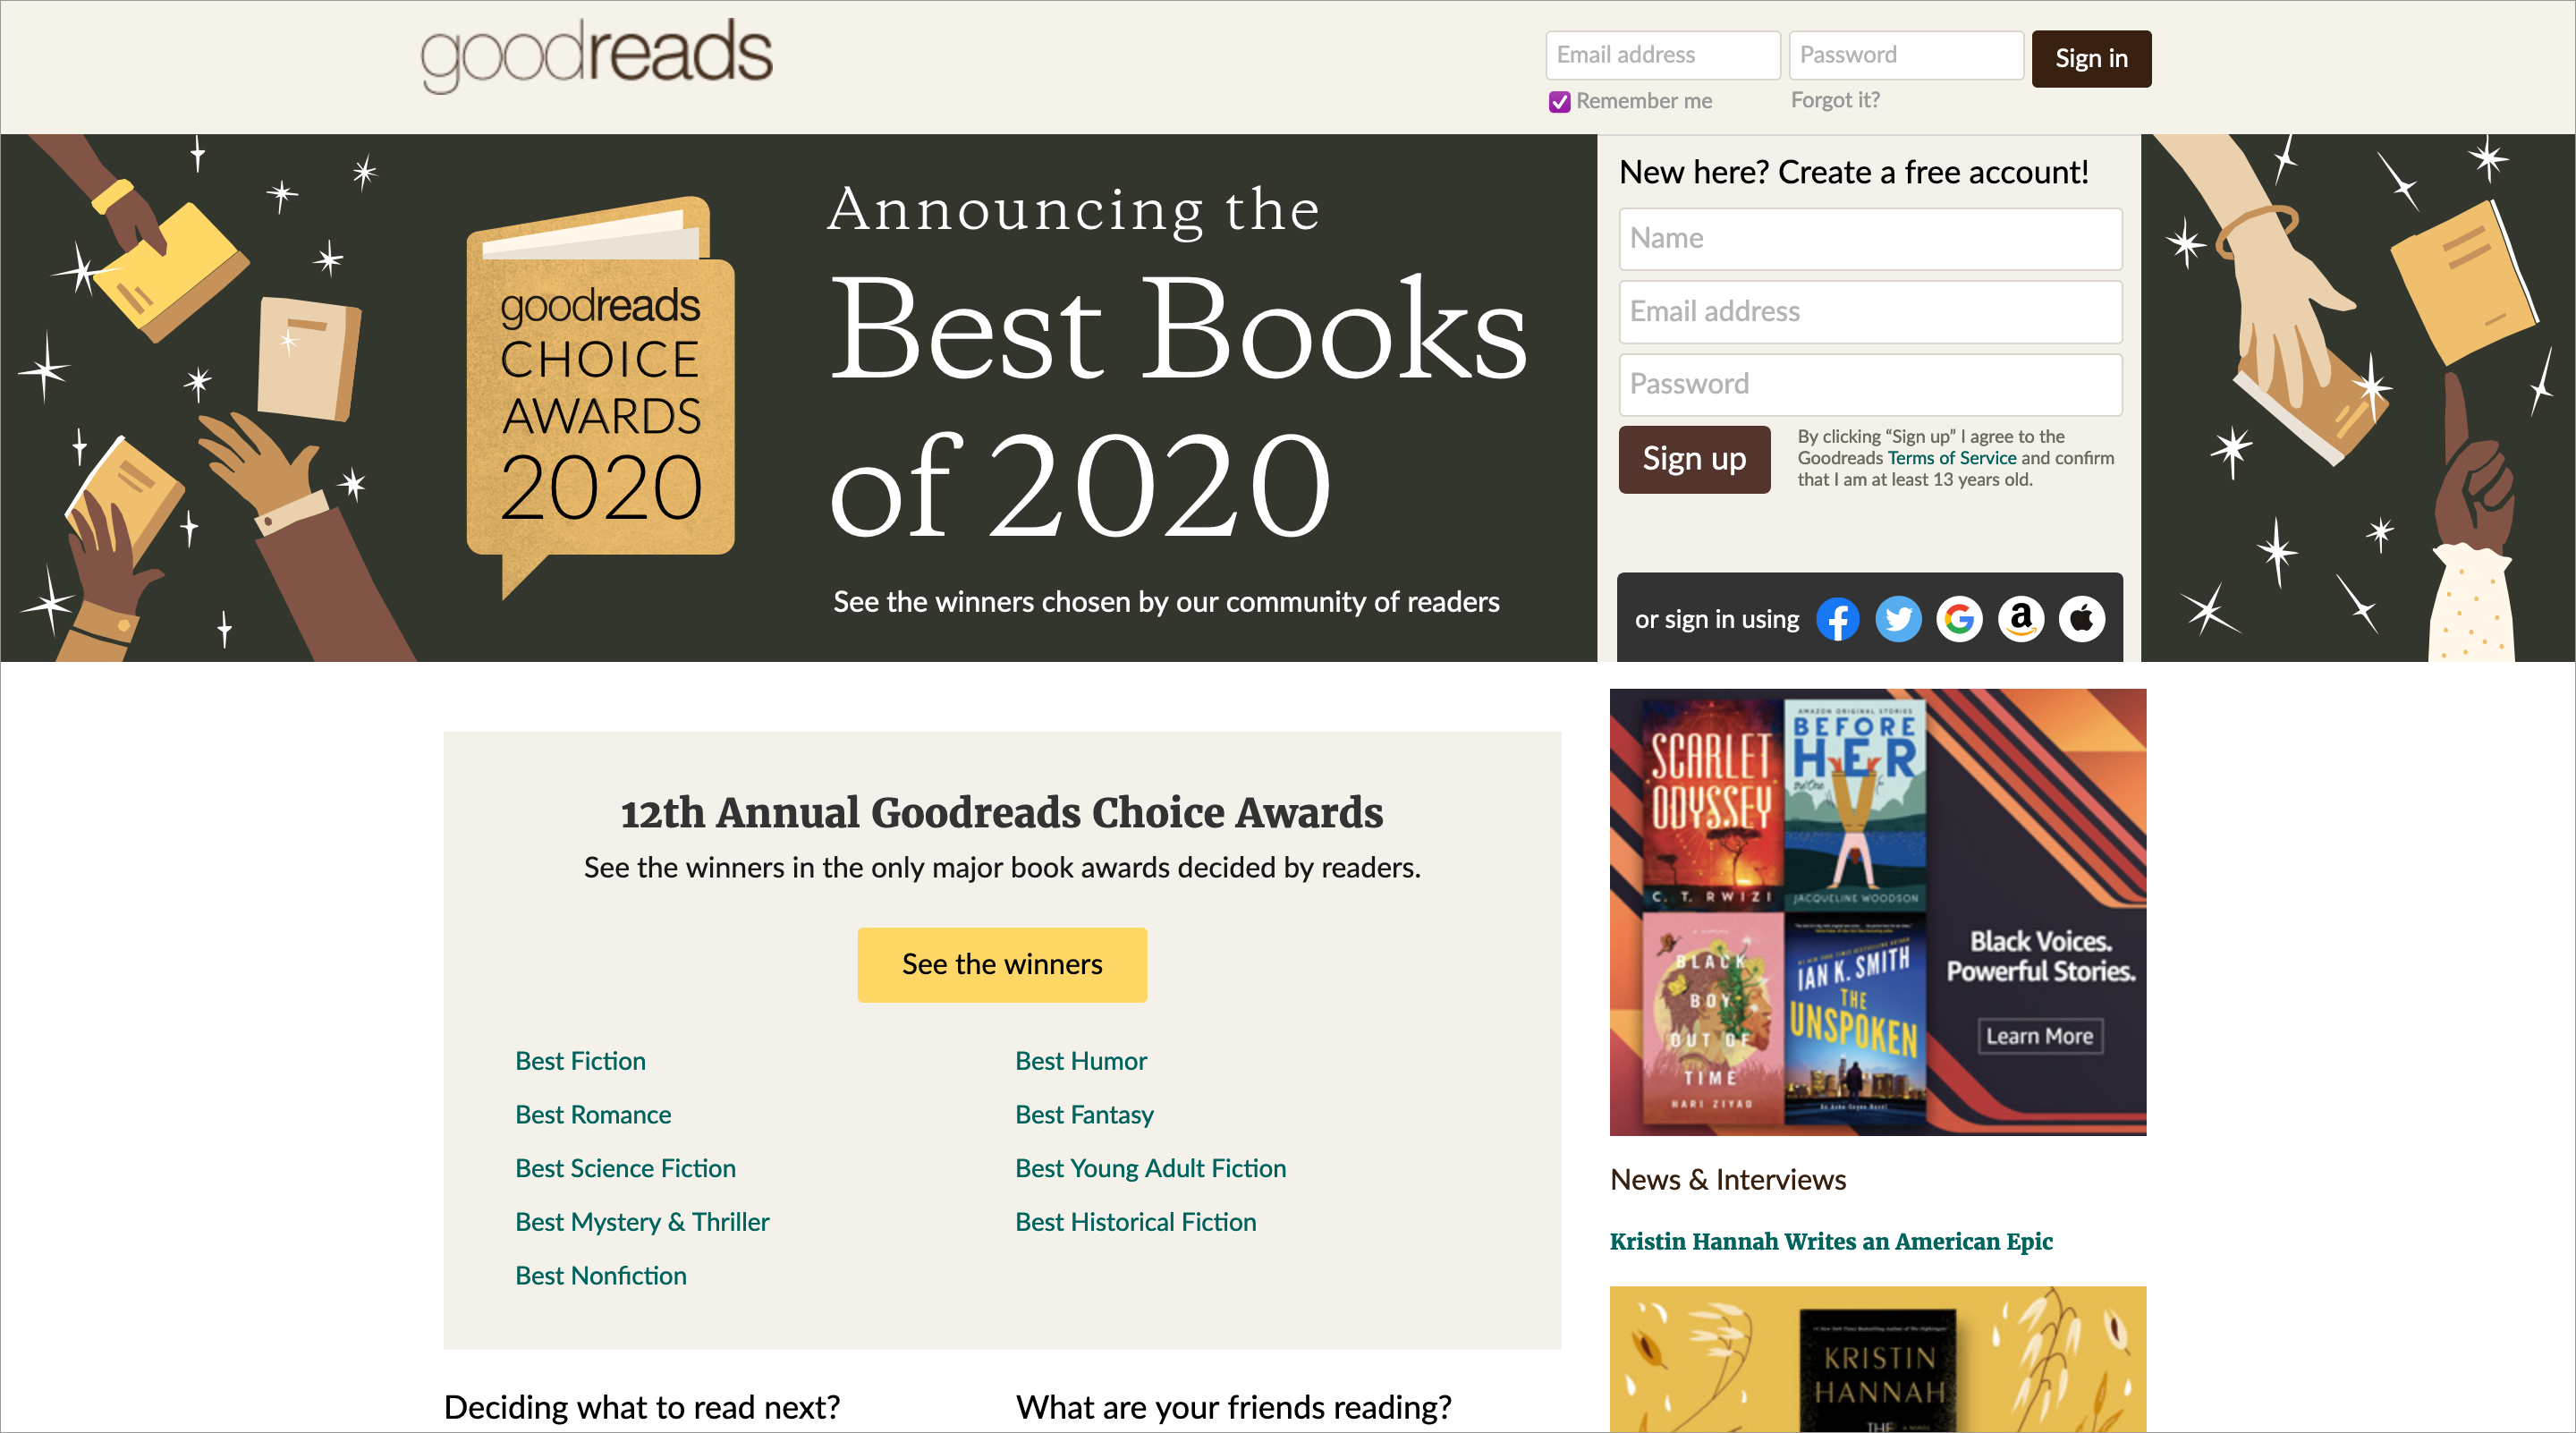 goodreads.com in 2021